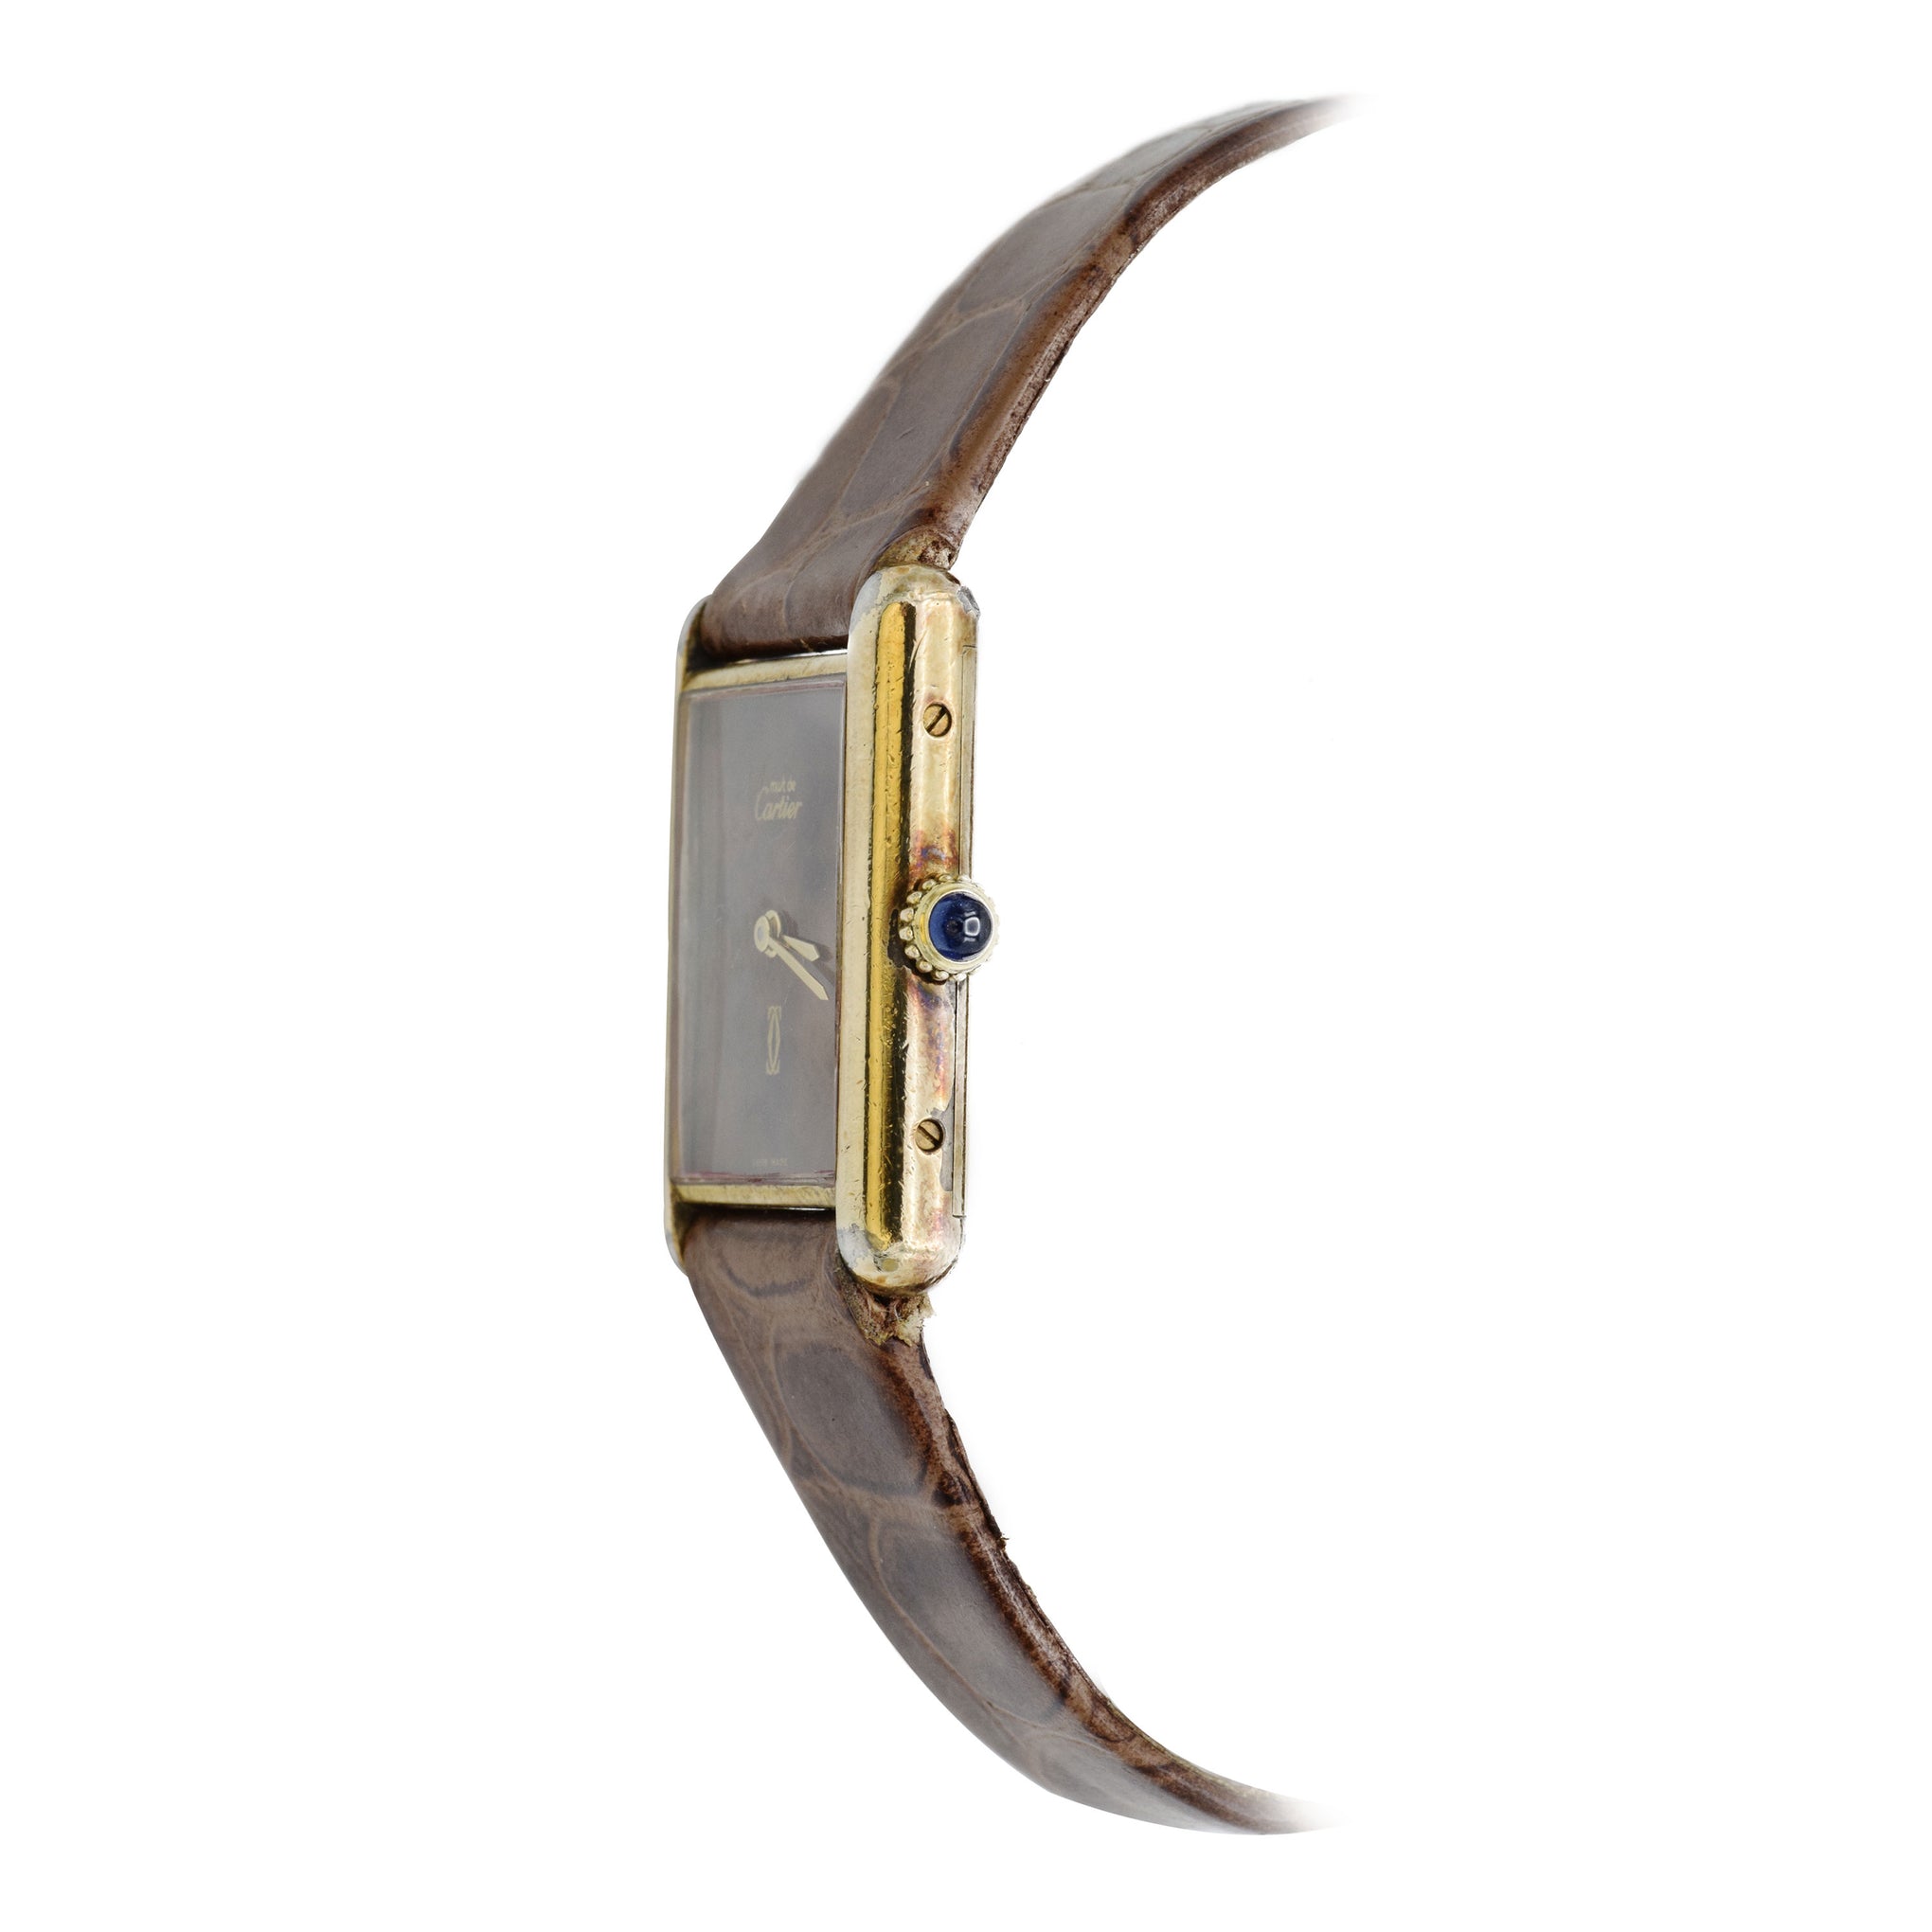 Vintage 1970s Cartier Watch